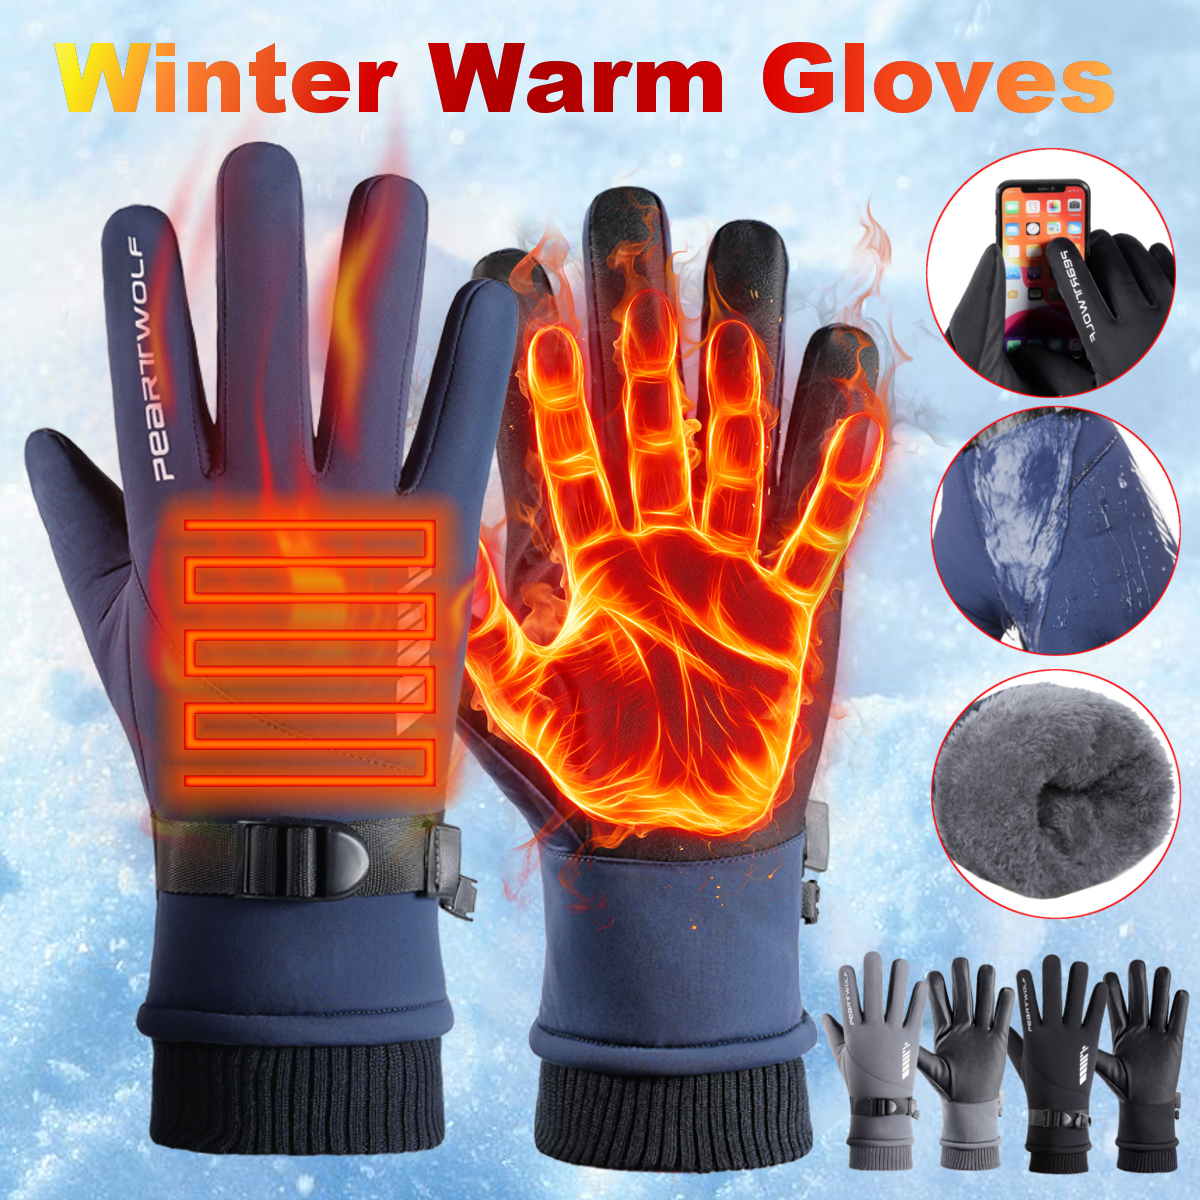 Outdoor-Skiing-Warm-Fleece-Gloves-Waterproof-Motocycle-Touch-Screen-Gloves-Motorbike-Racing-Riding-W-1771476-2